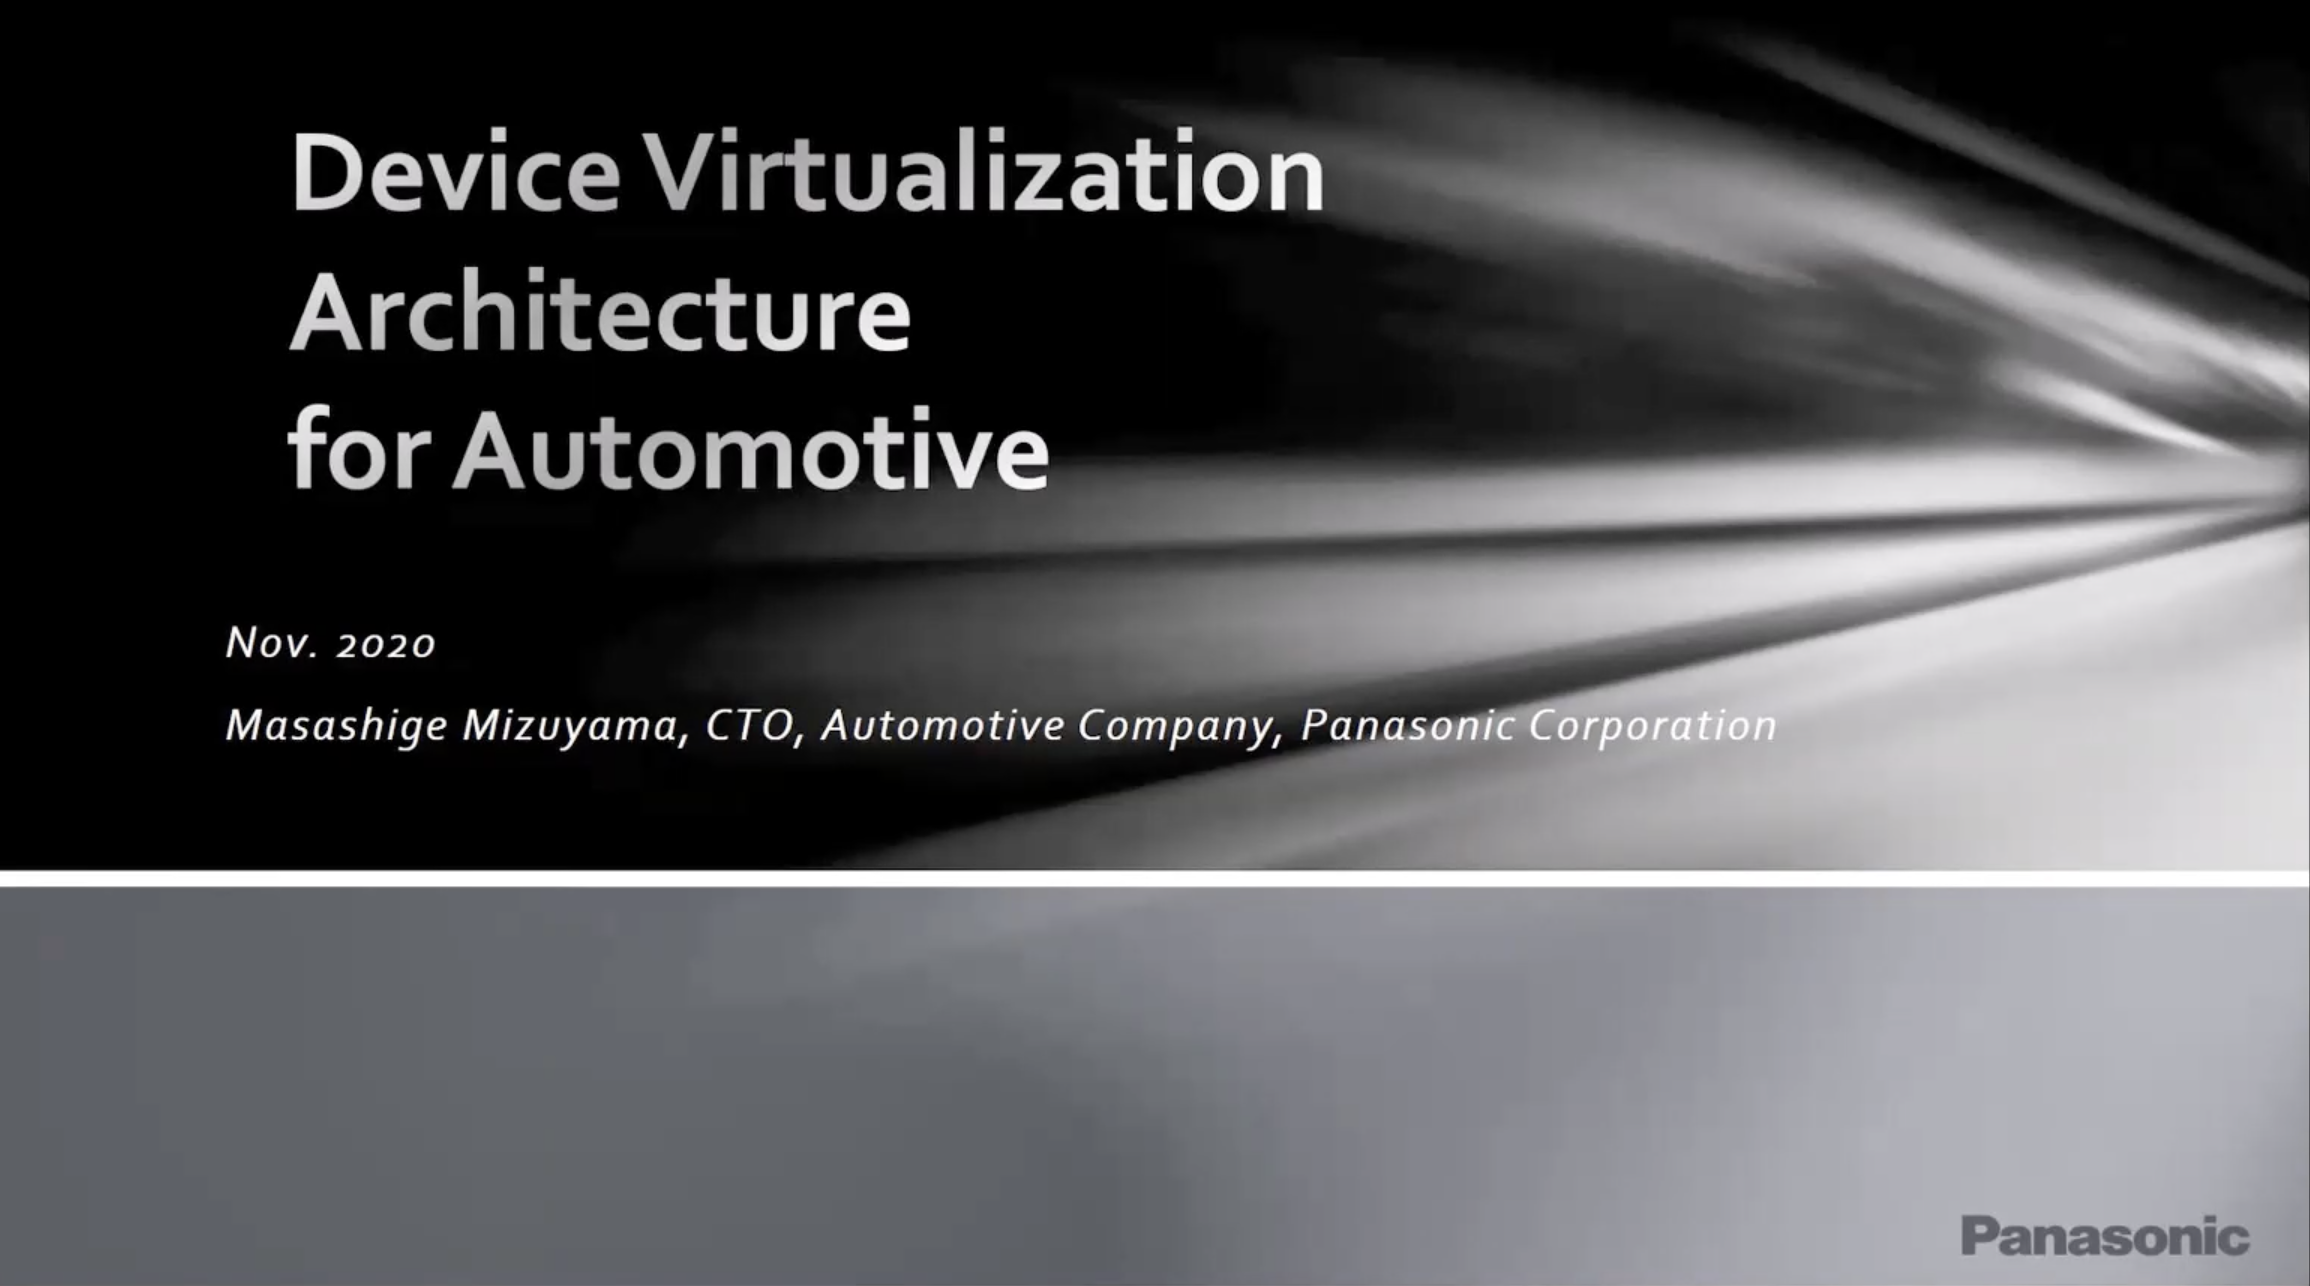 Device Virtualization Architecture in Automotive